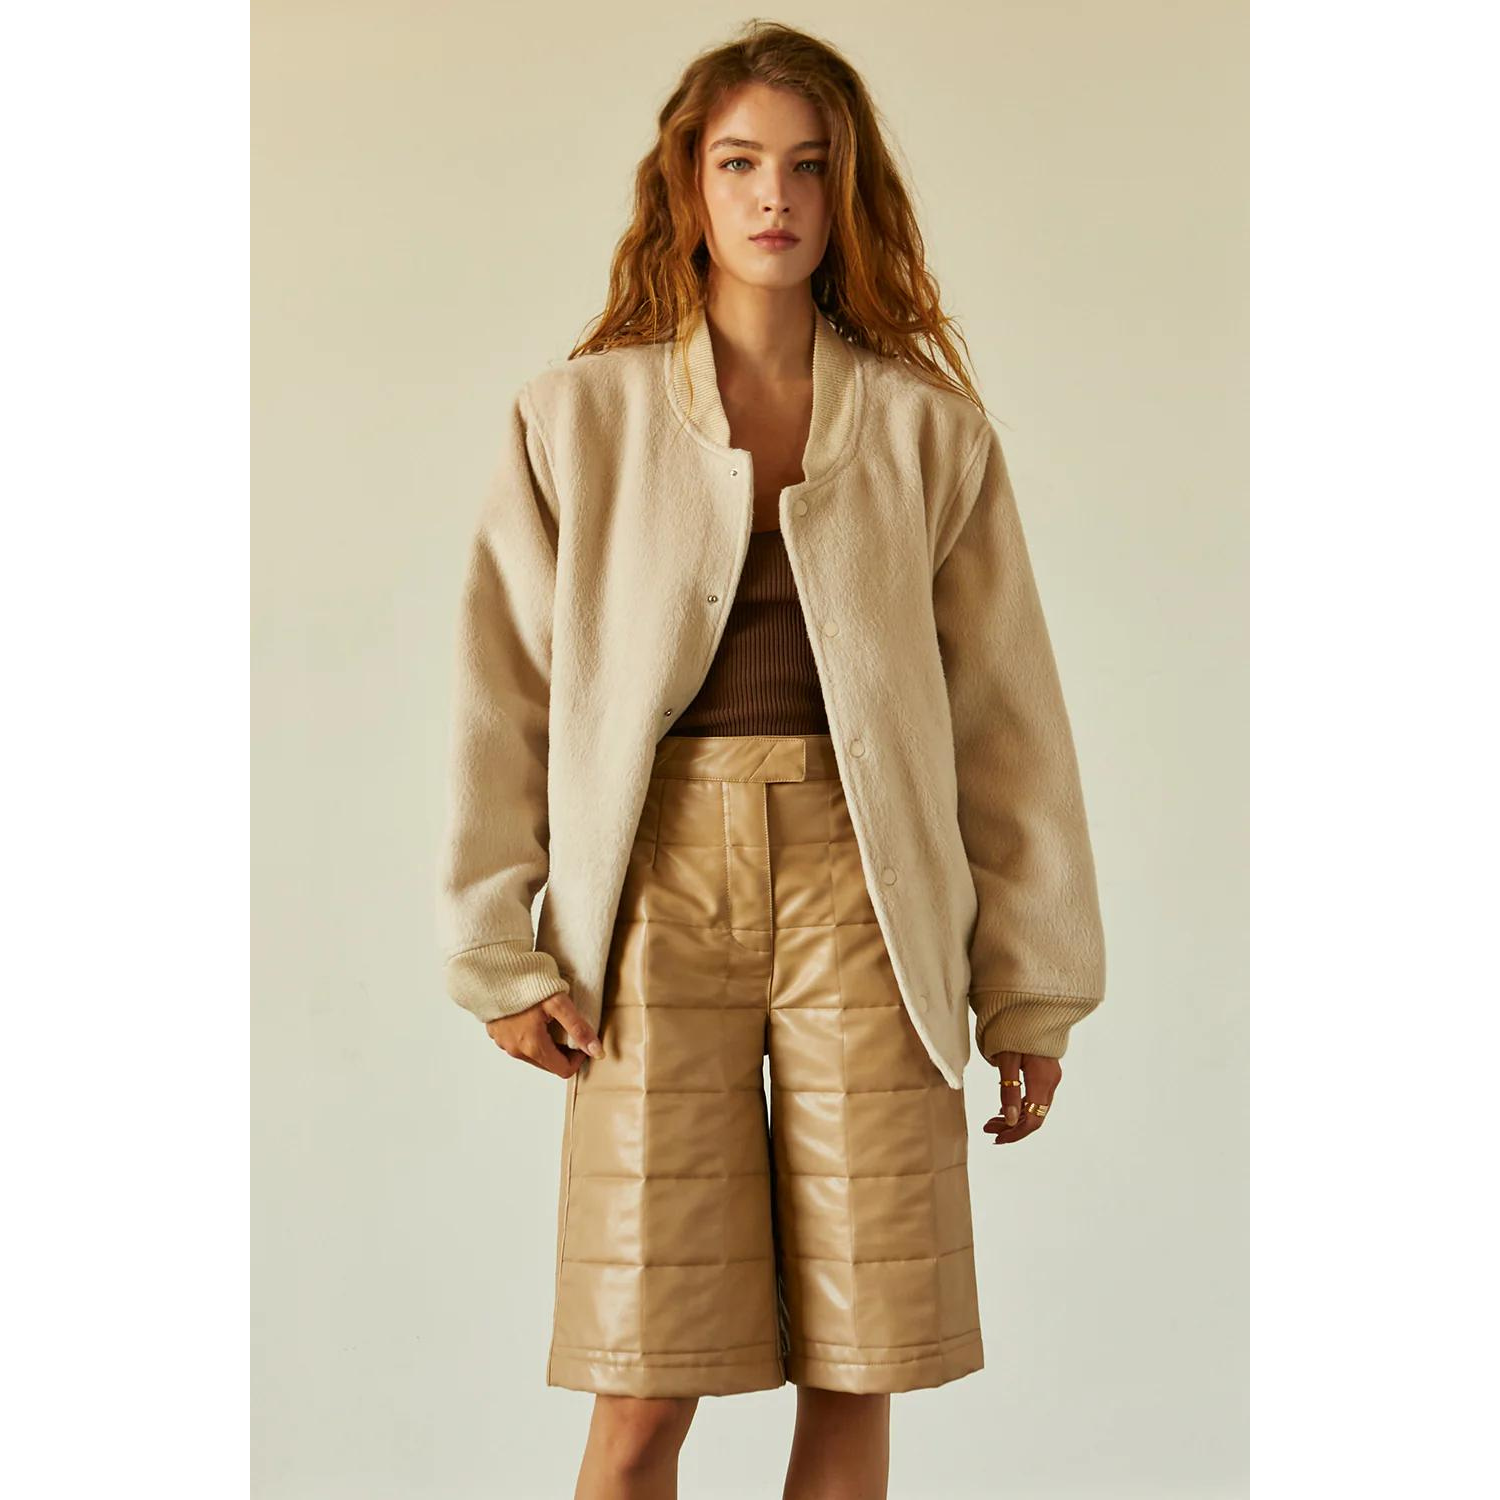 Zara's Viral Wool Bomber Jacket: 8 Alternatives To Shop — Lily Chérie